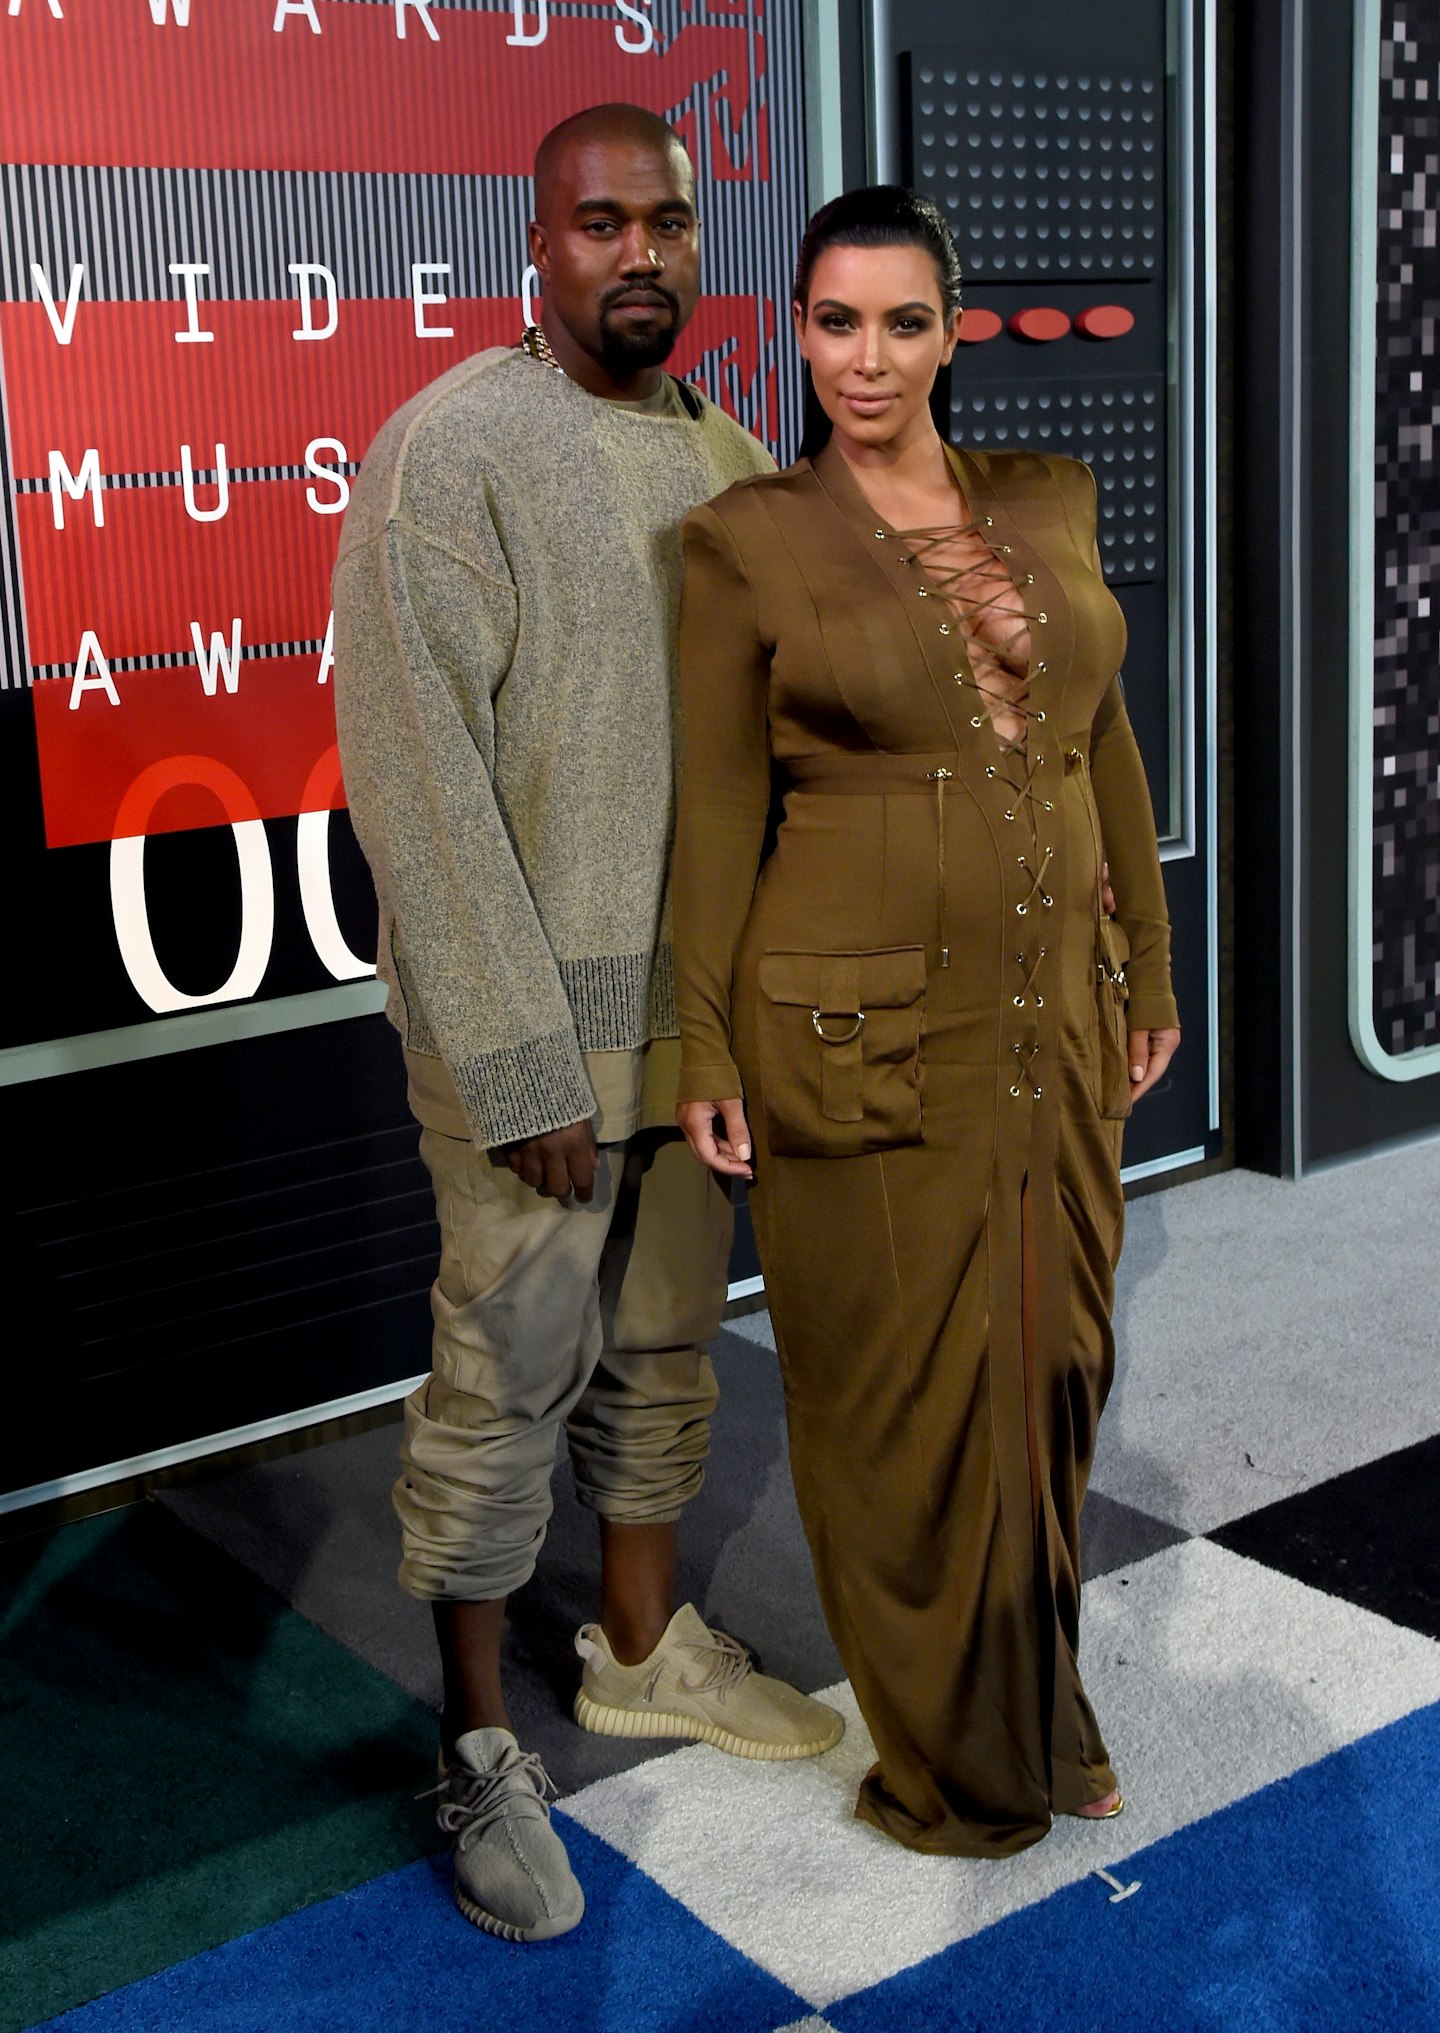 Kim Kardashian and Kayne West at the MTV Awards in 2015